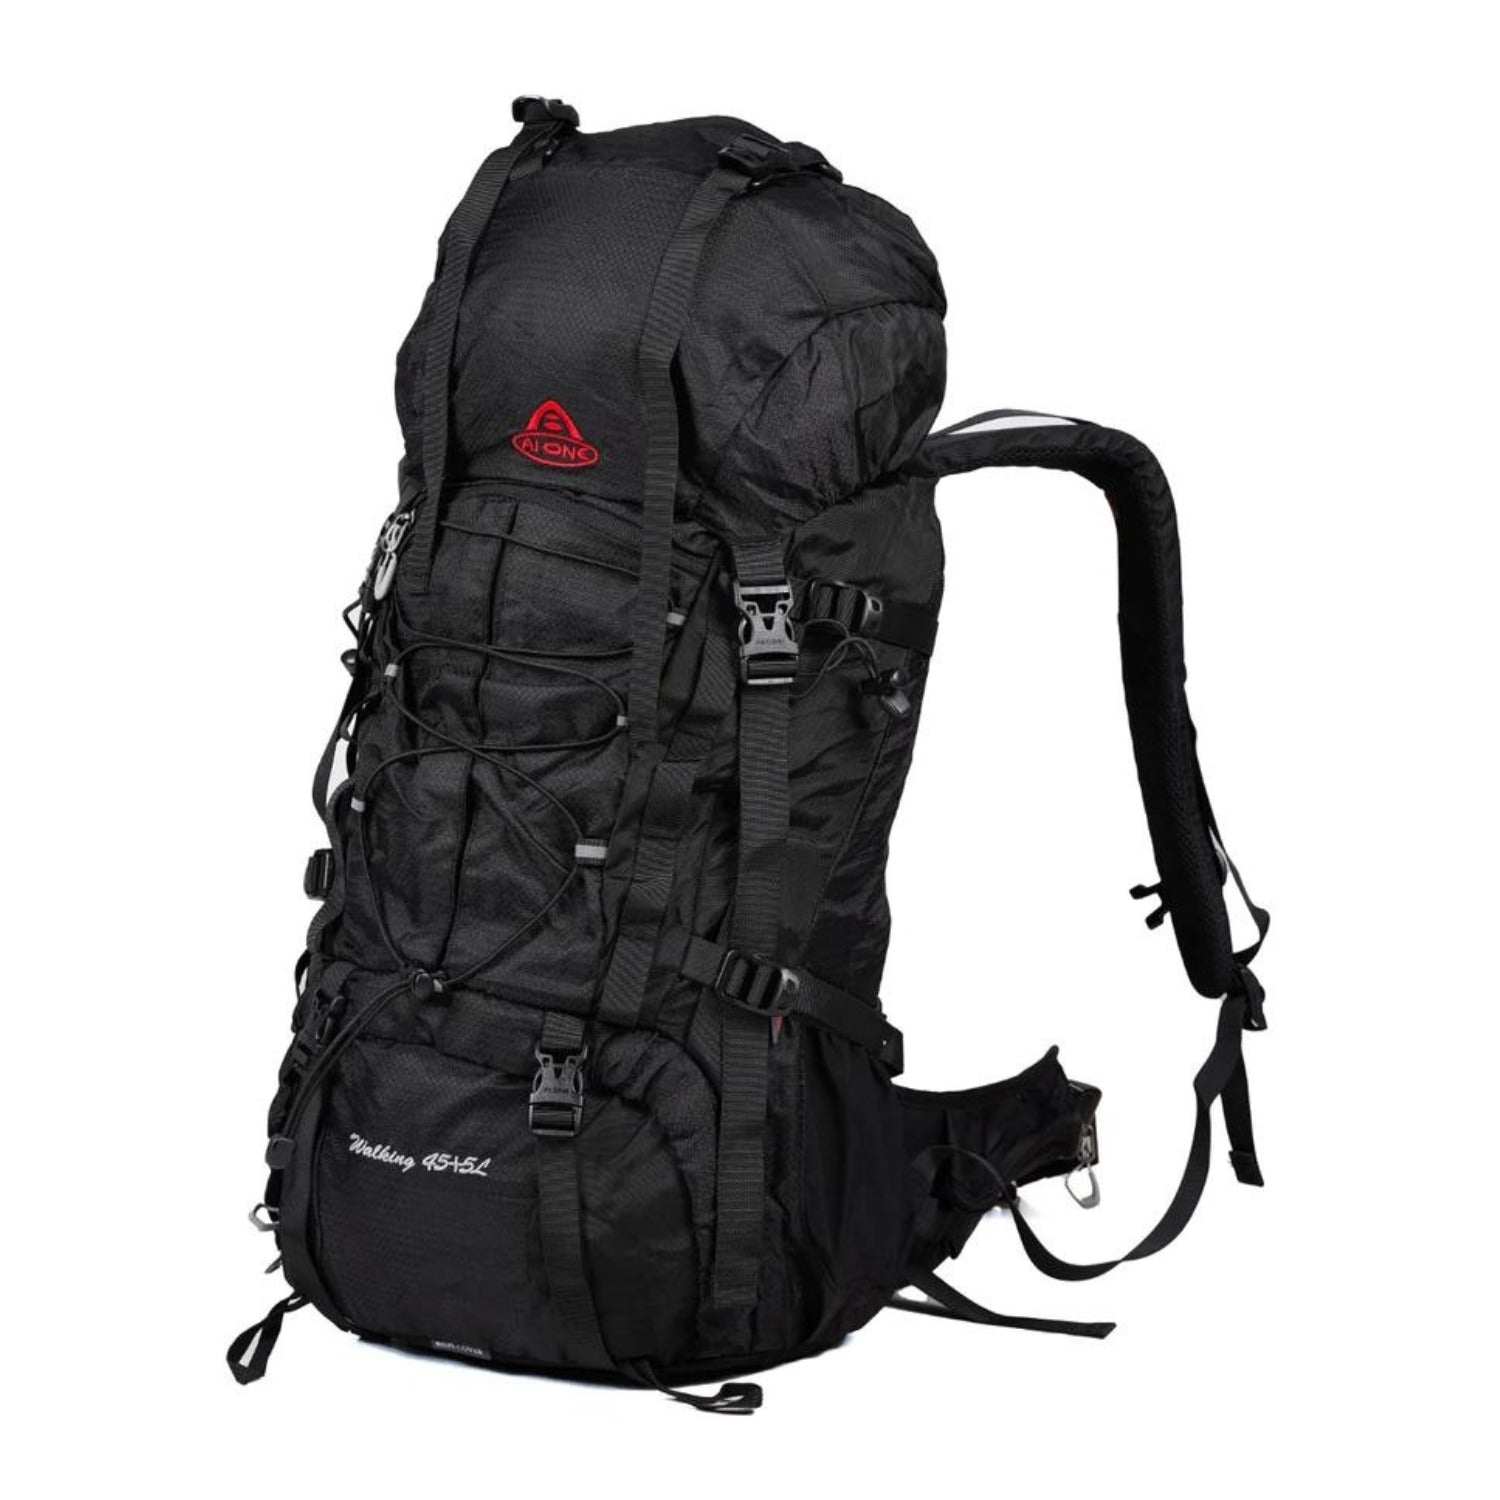 Buy Gokyo Pro Trekking Backpack 45 + 5 Ltrs Black | Trekking Backpack at Gokyo Outdoor Clothing & Gear